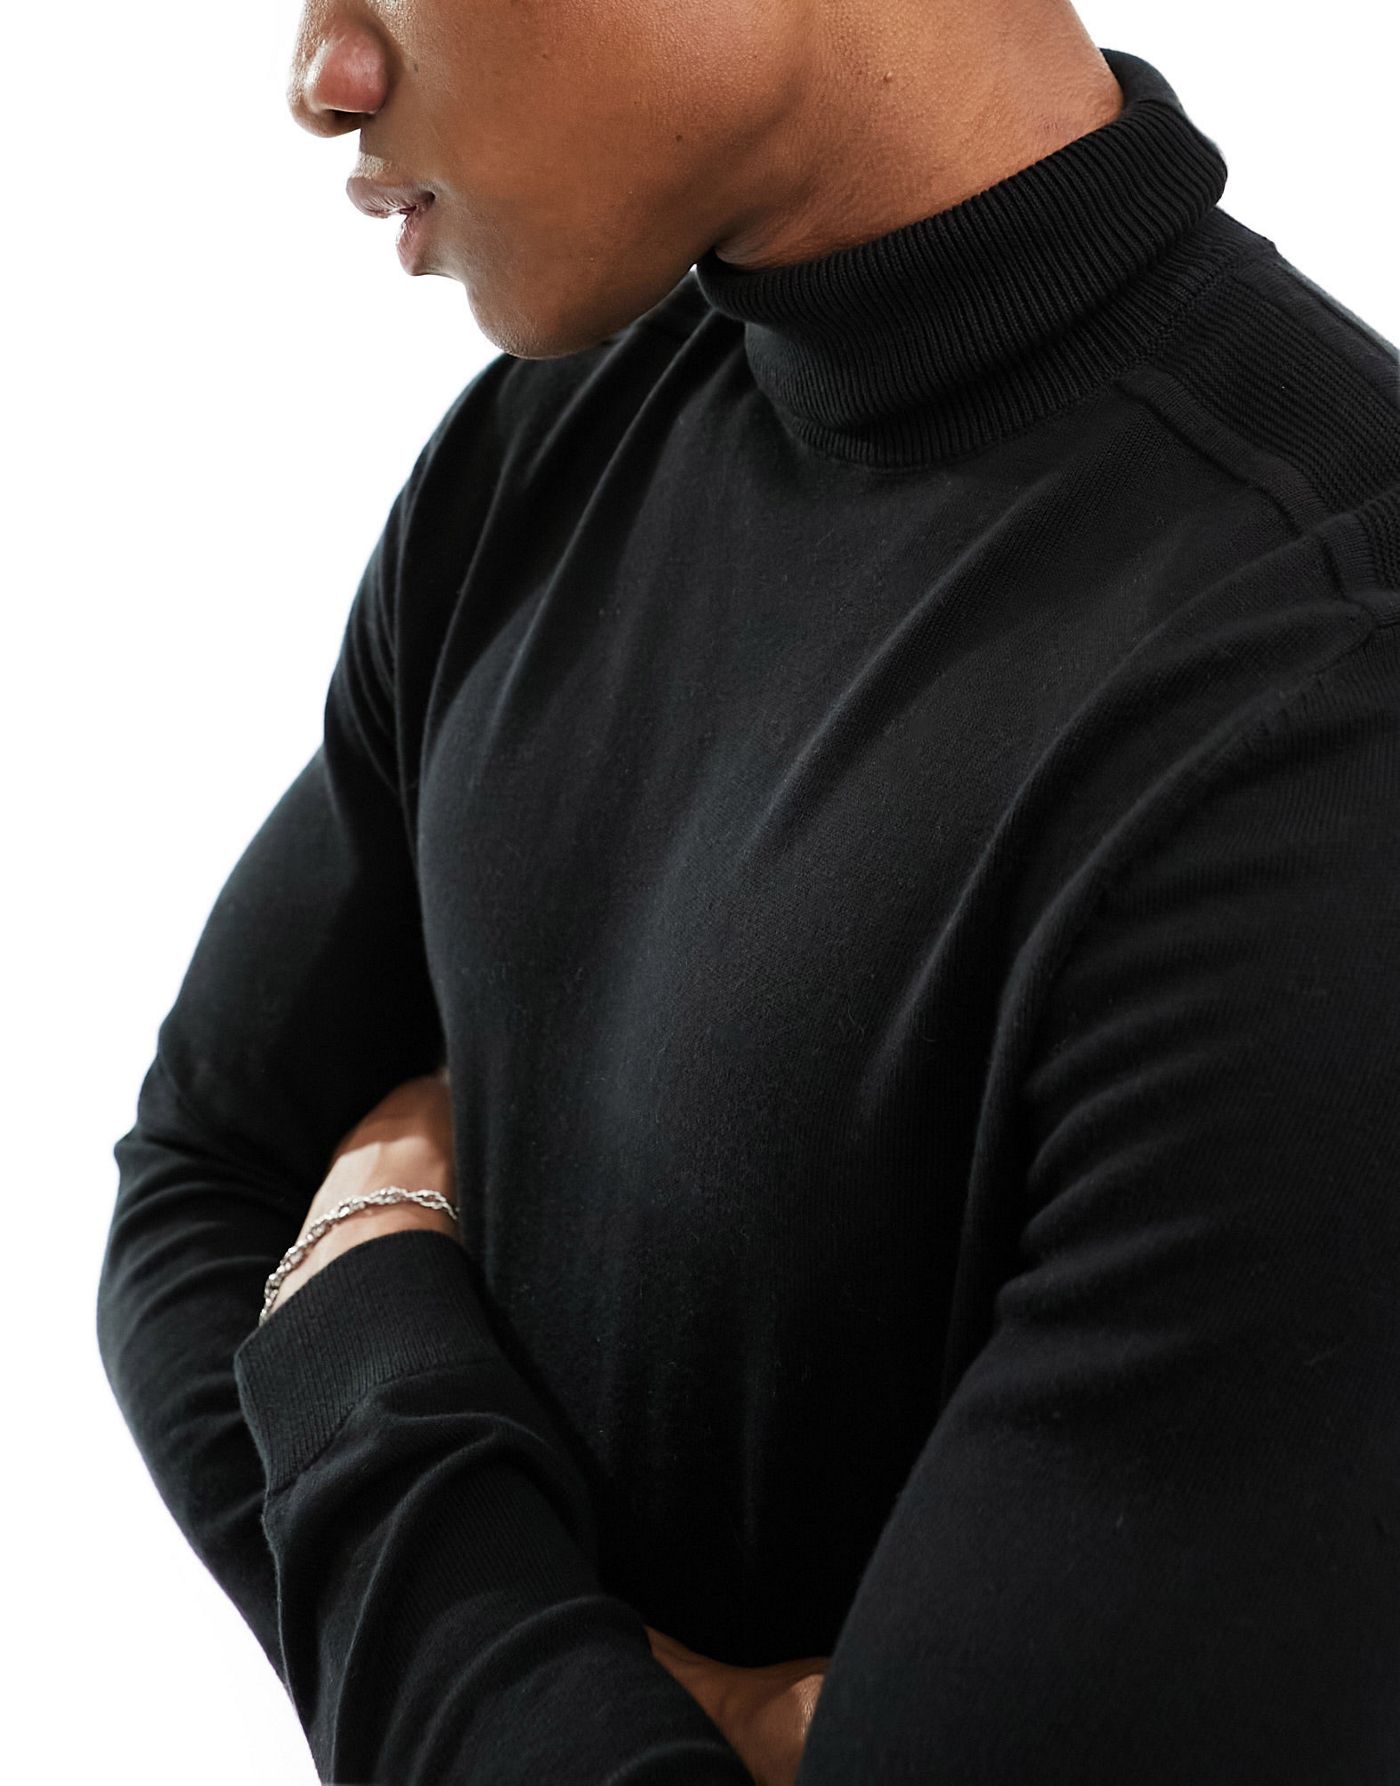 Selected Homme roll neck knit jumper in black